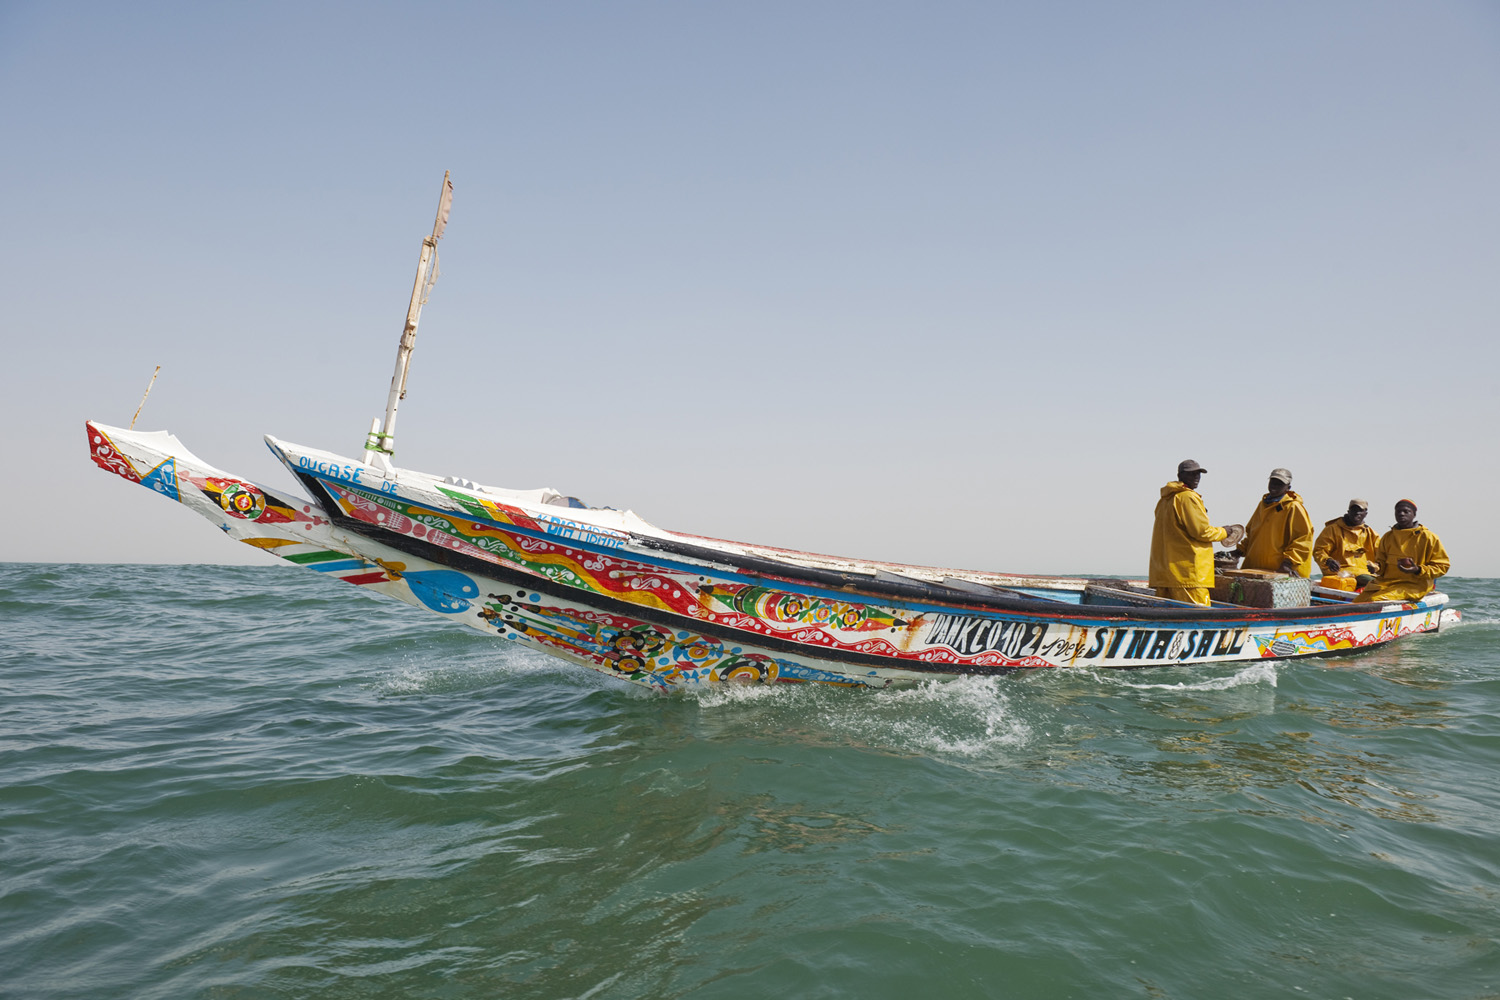 Atlantic Ocean, Mauritania, 8 March 2010 West African Pirogue fishing boat.